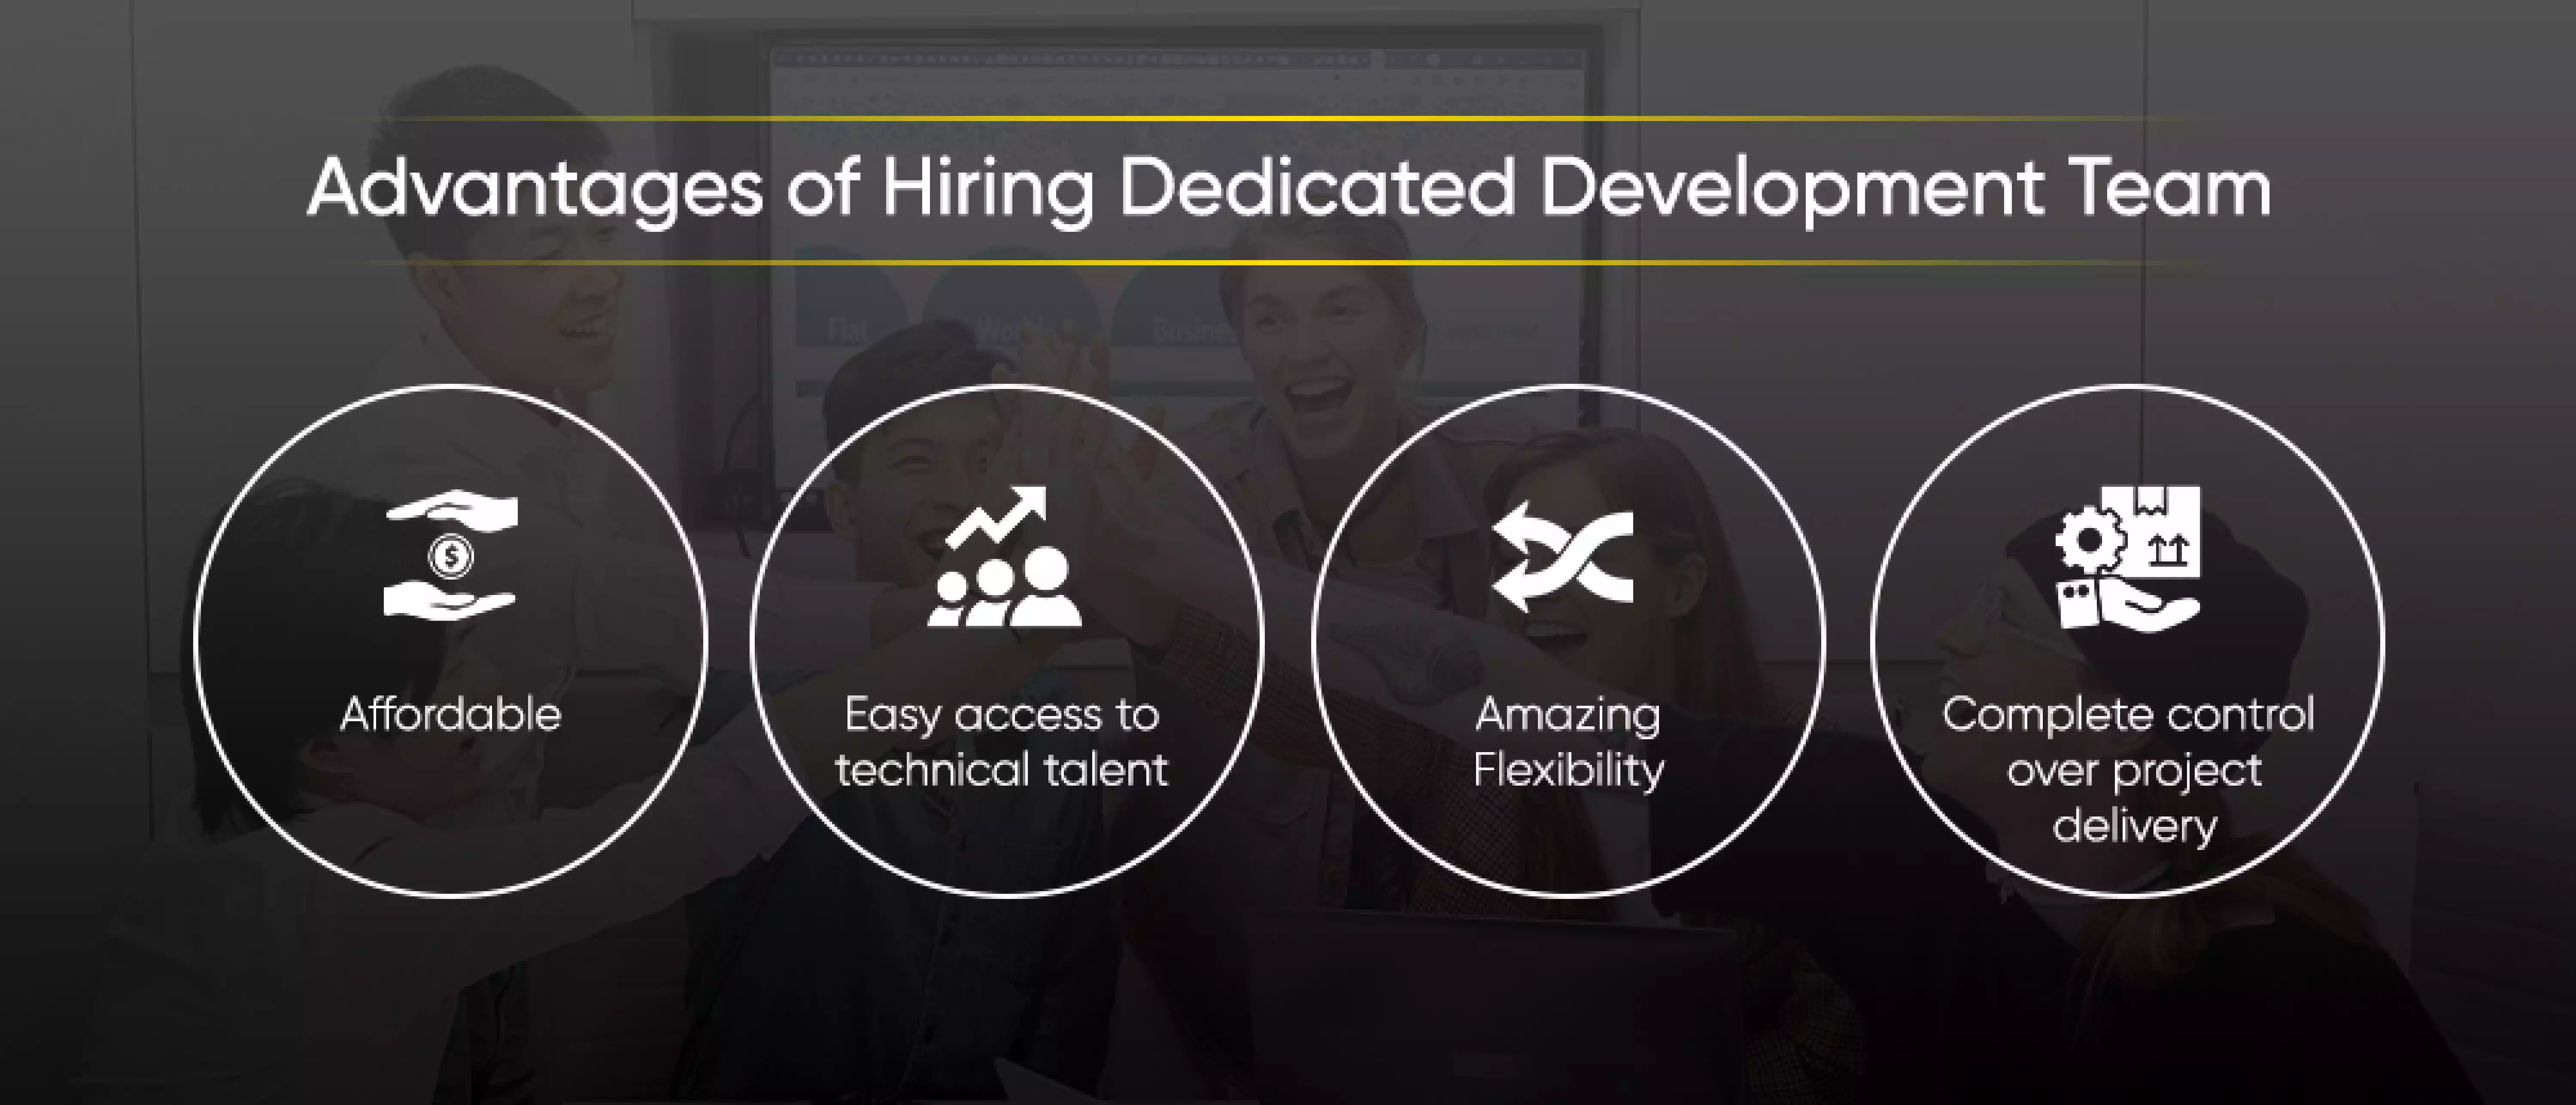 Advantages of Hiring Dedicated Development Team